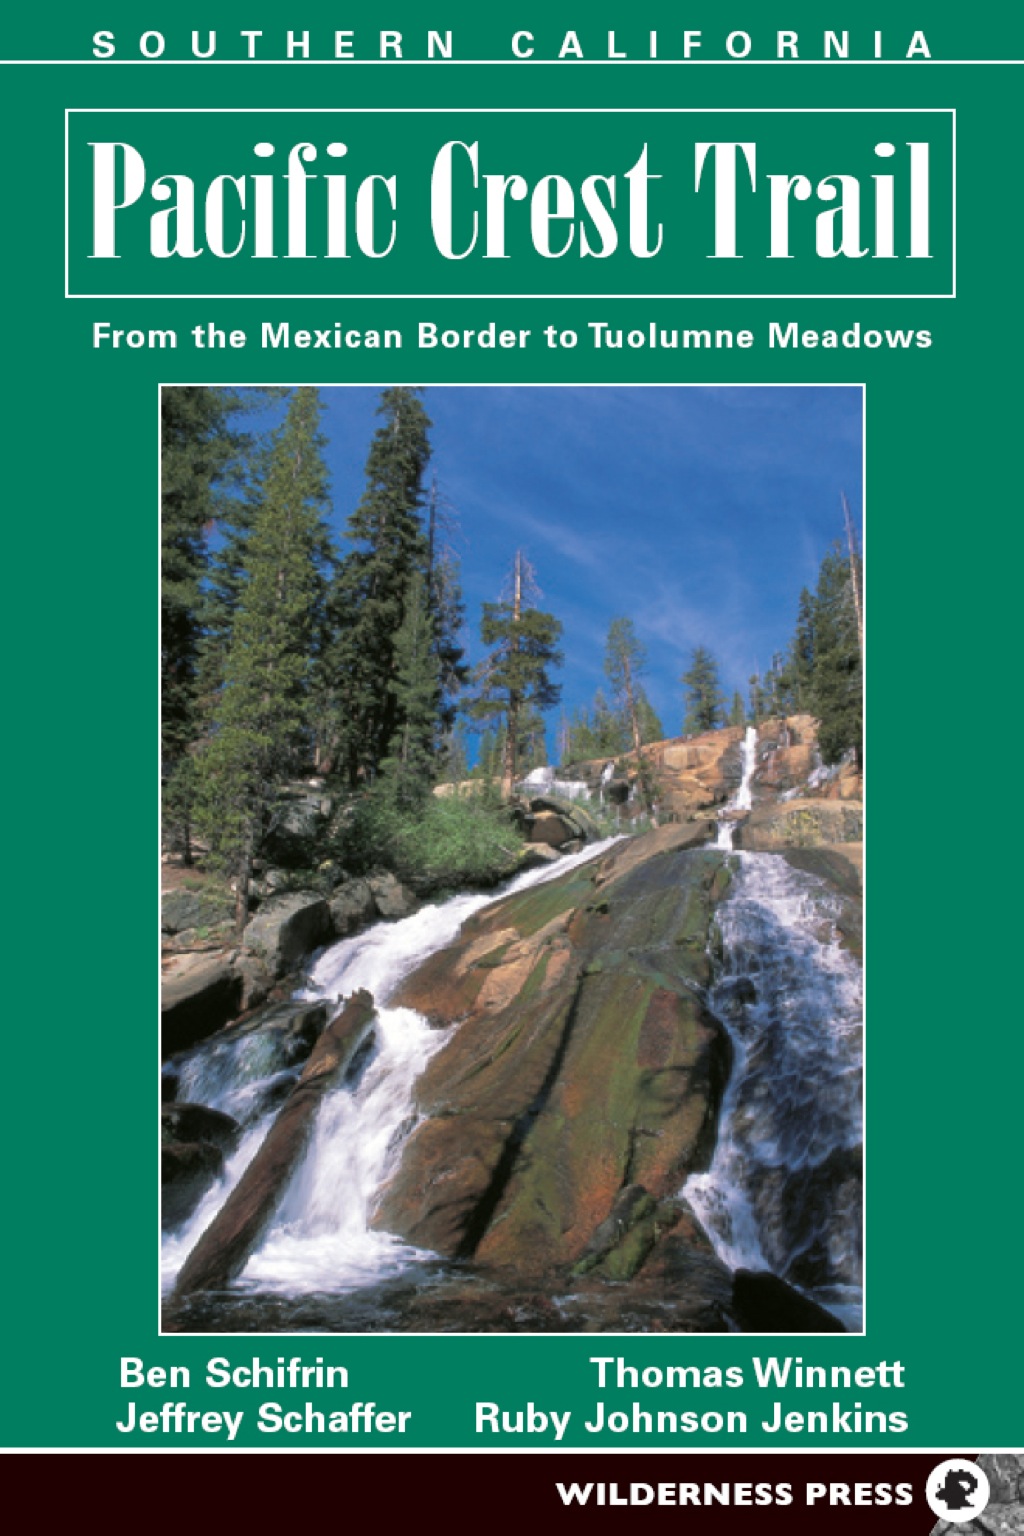 Pacific Crest Trail: Southern California (eBook) - Ben Schirfin; Jeffrey P. Schaffer; Thomas Winnett; Ruby Johnson Jenkins,